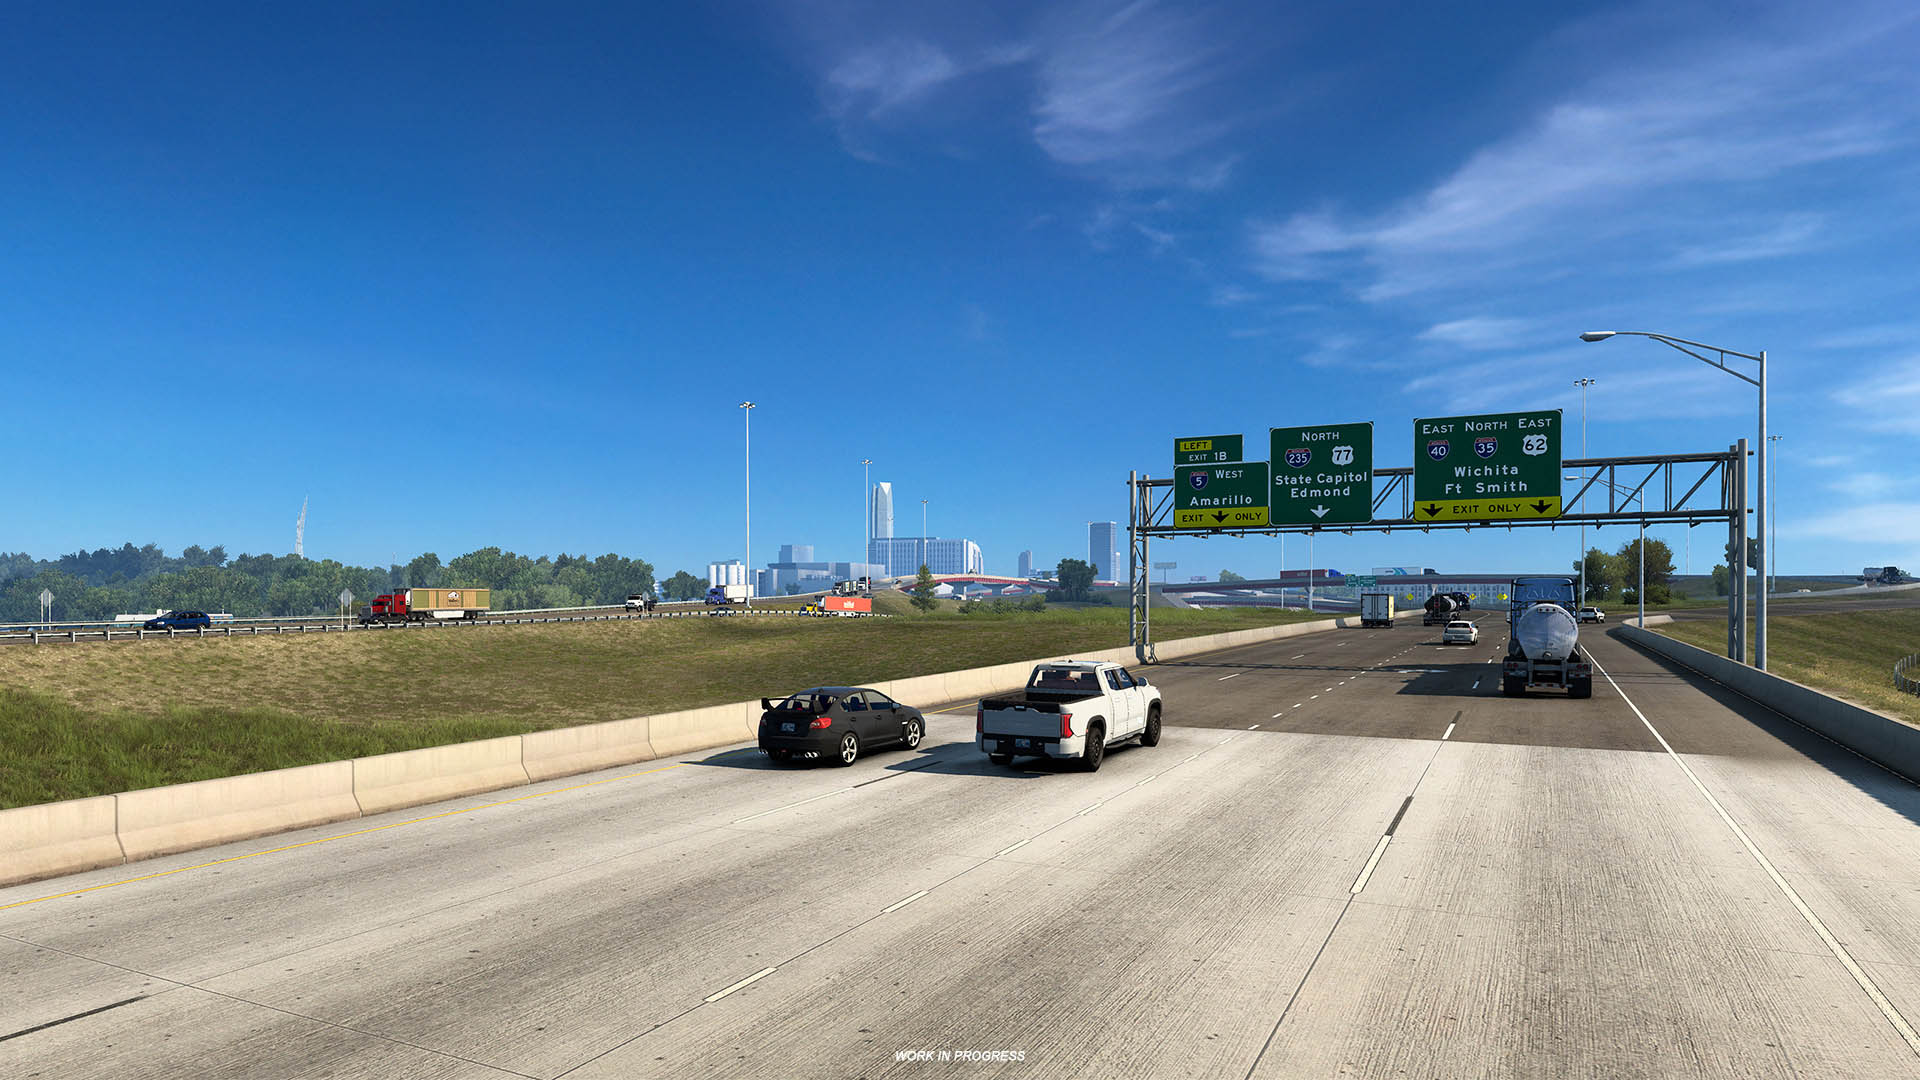 American Truck Simulator - Oklahoma DLC 